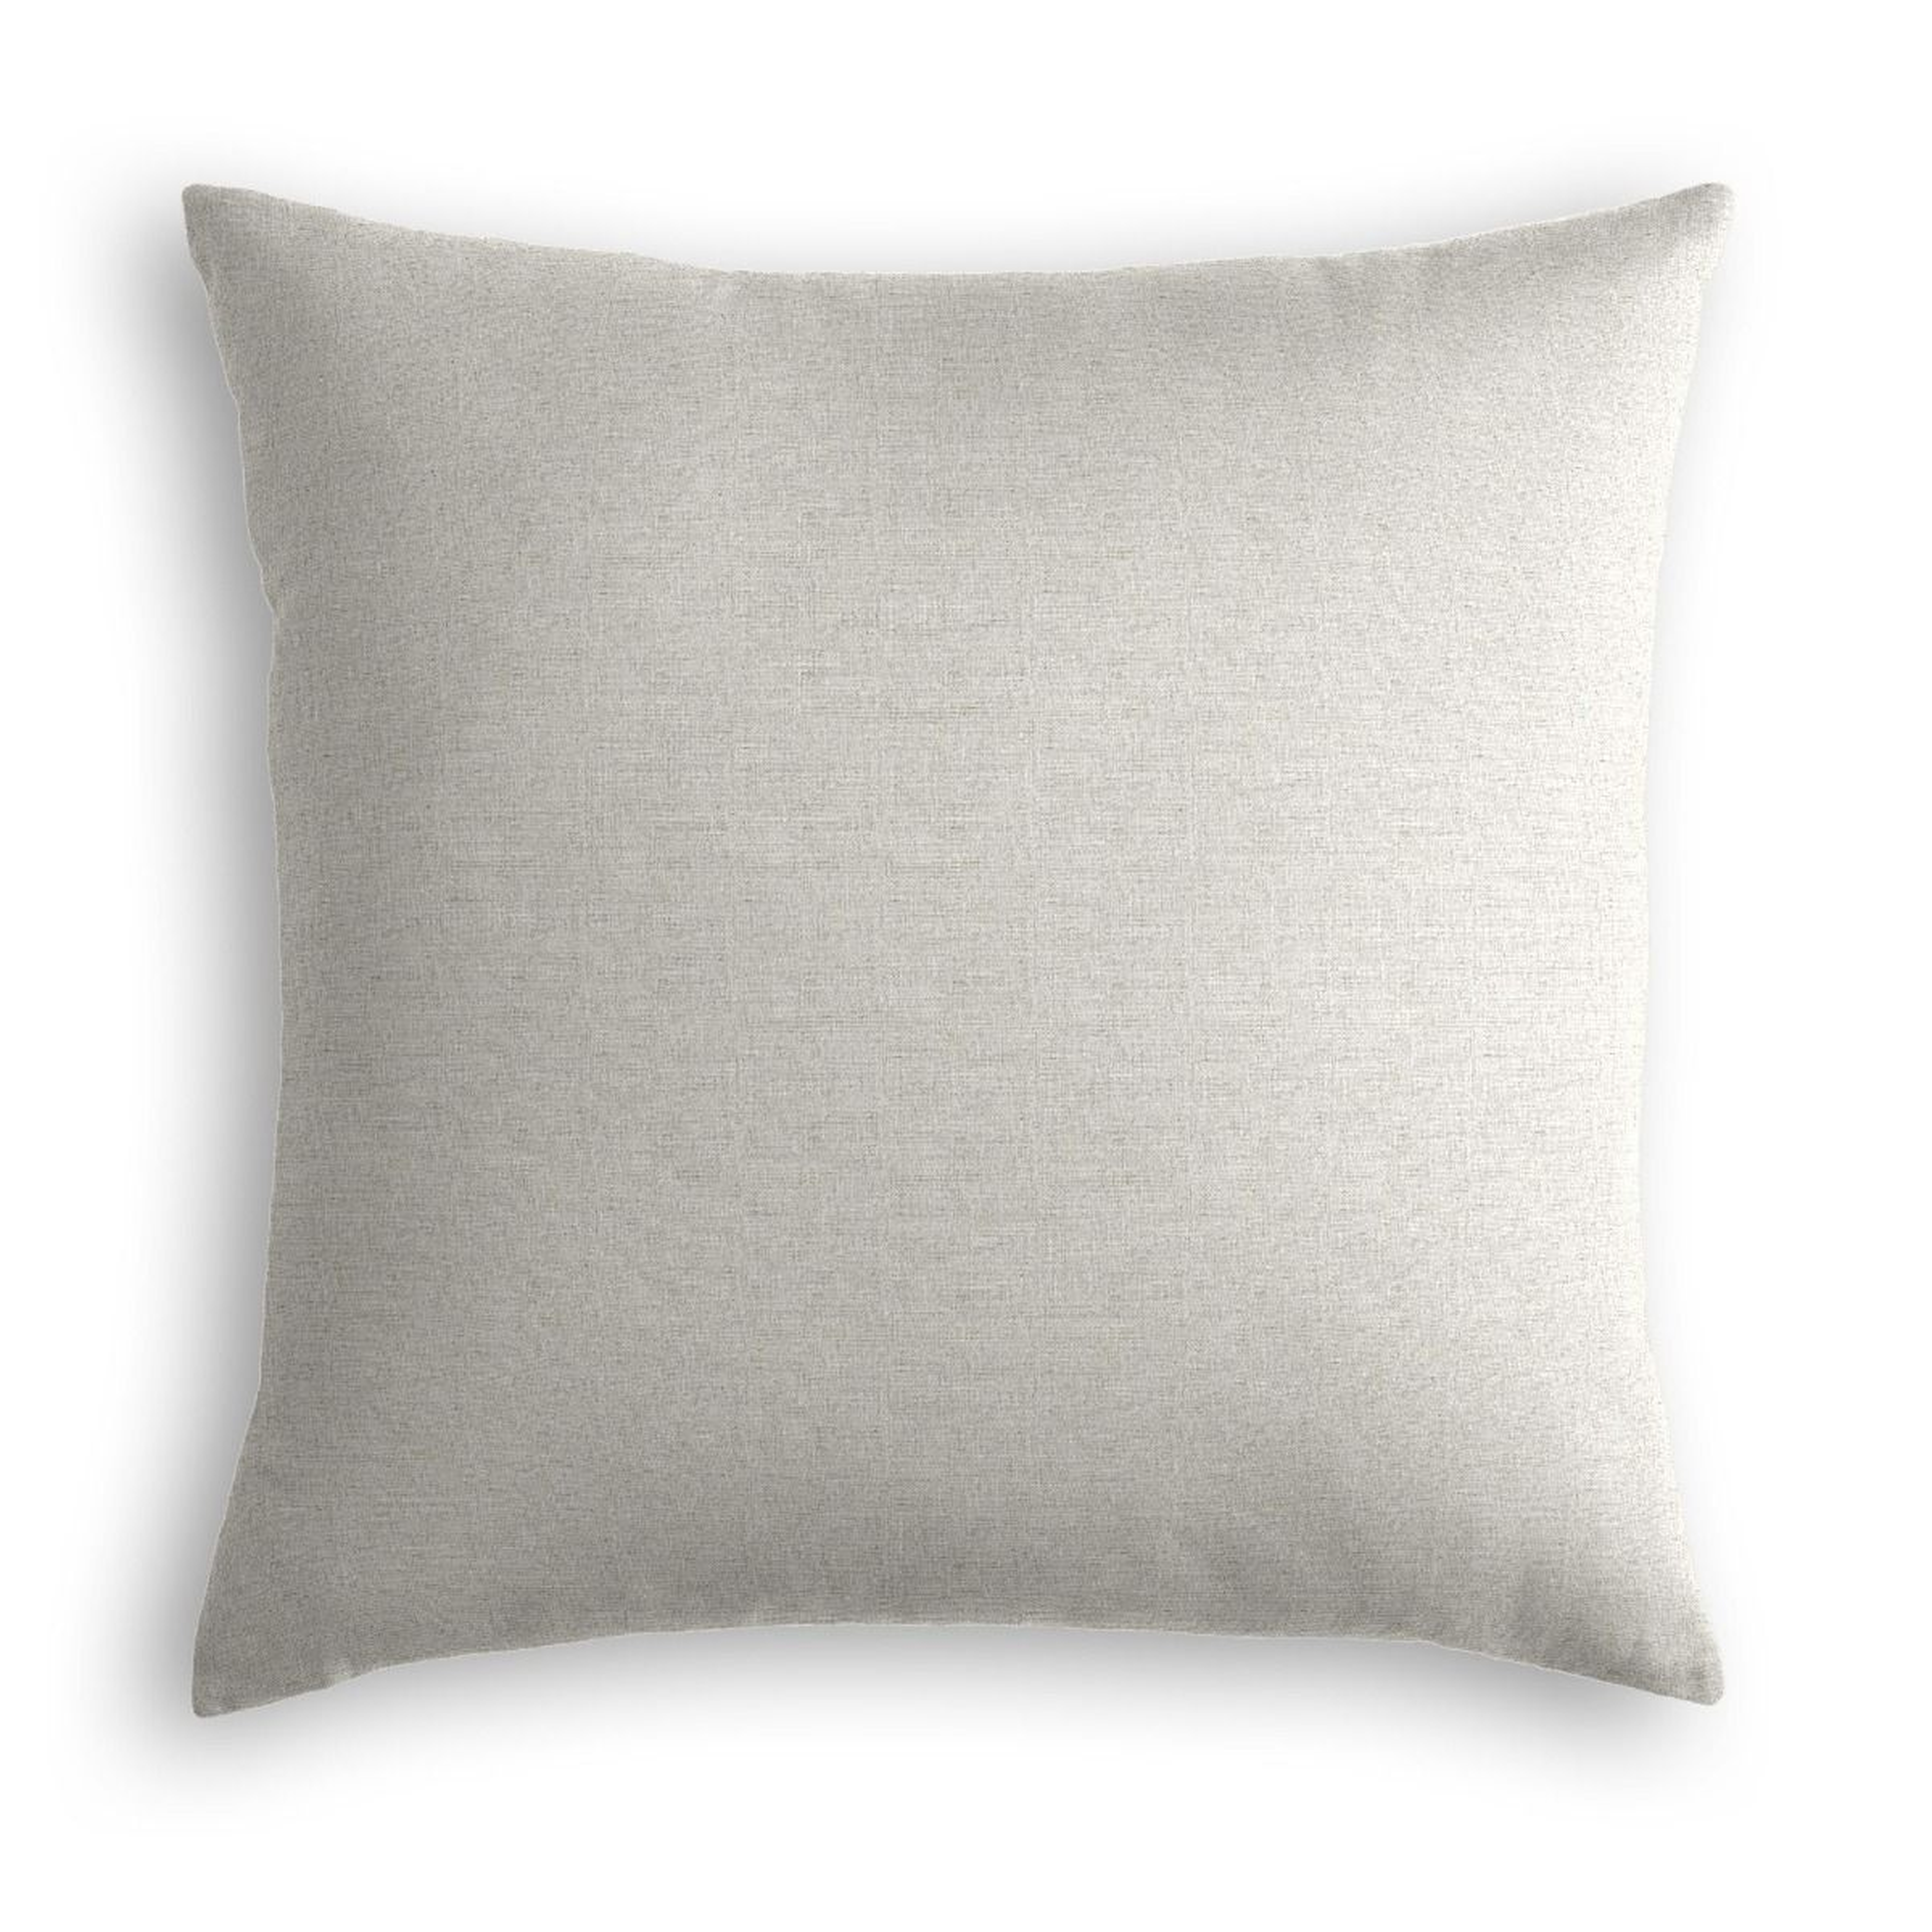 Classic Linen Pillow, Sandy Tan, 18" x 18" - Havenly Essentials